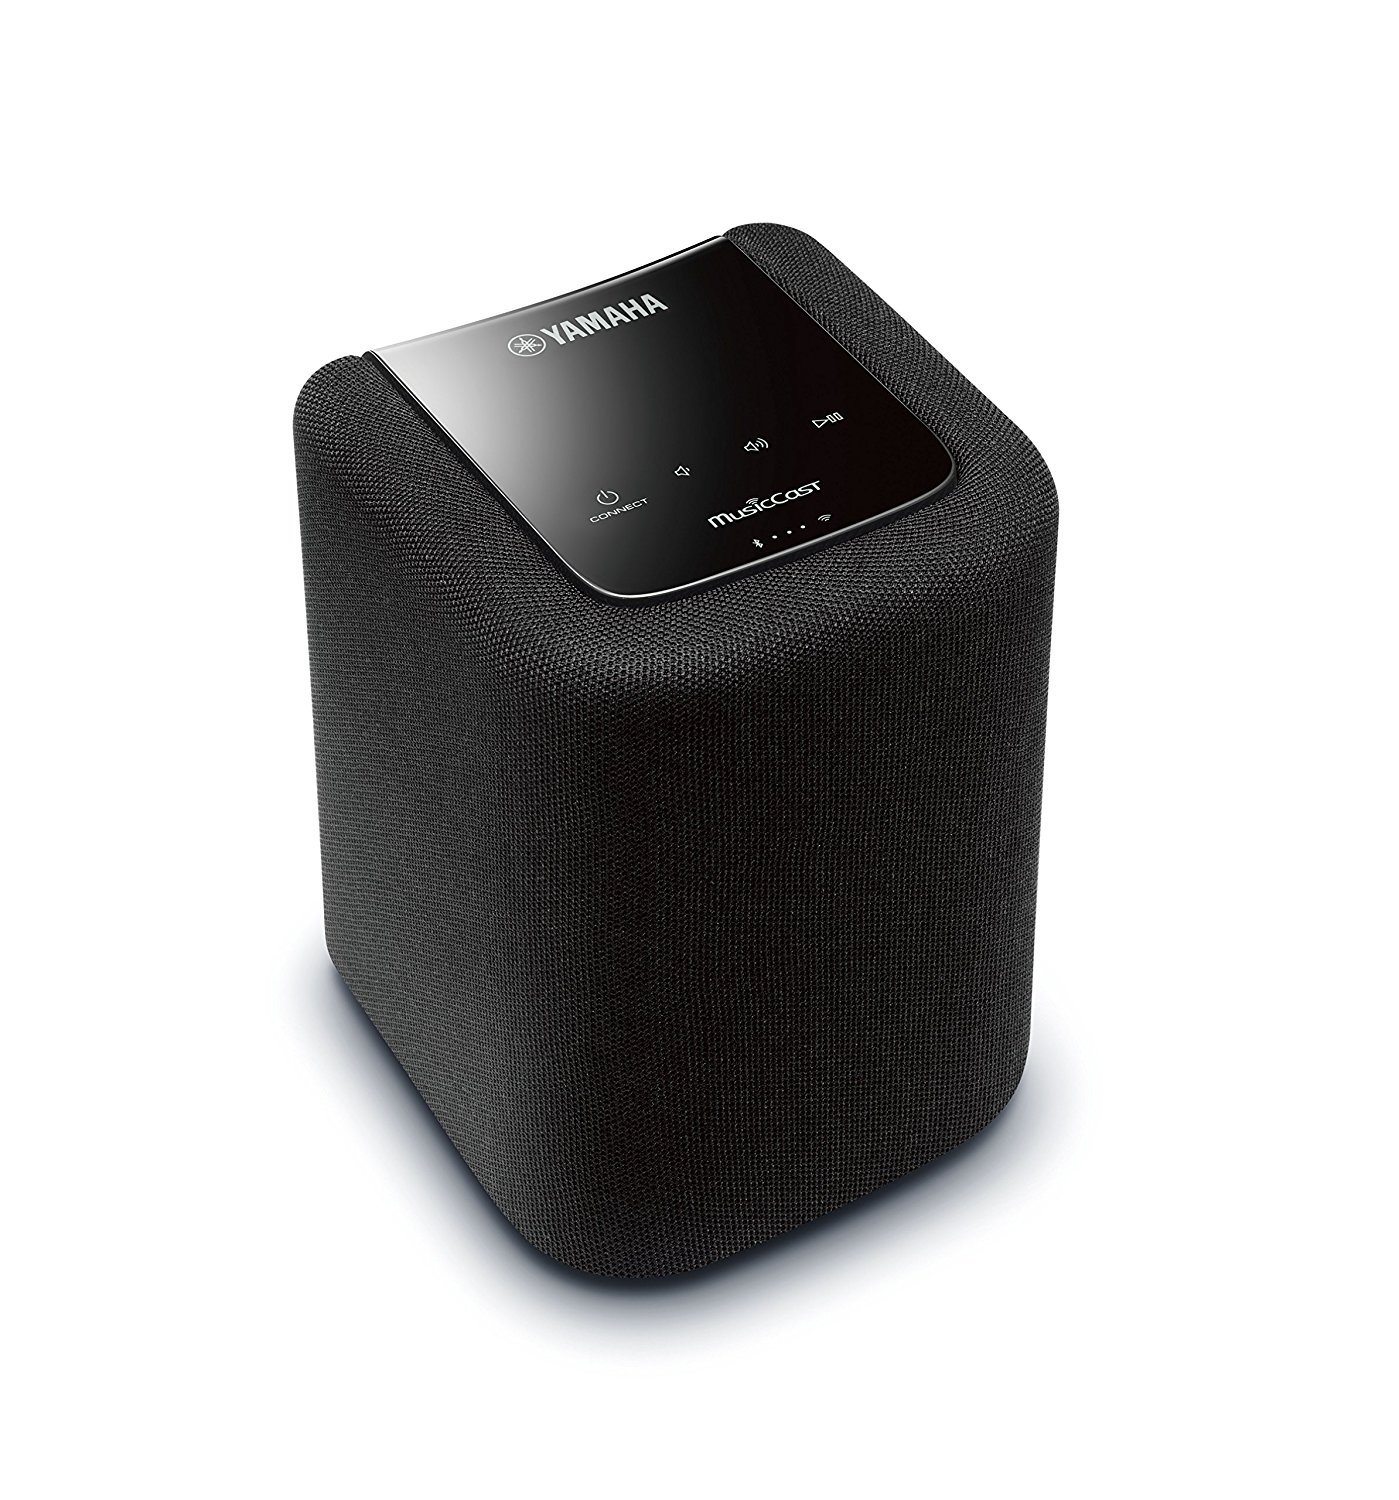 Yamaha MusicCast WX-010 Wireless Speaker with Bluetooth (Black) - image 1 of 2